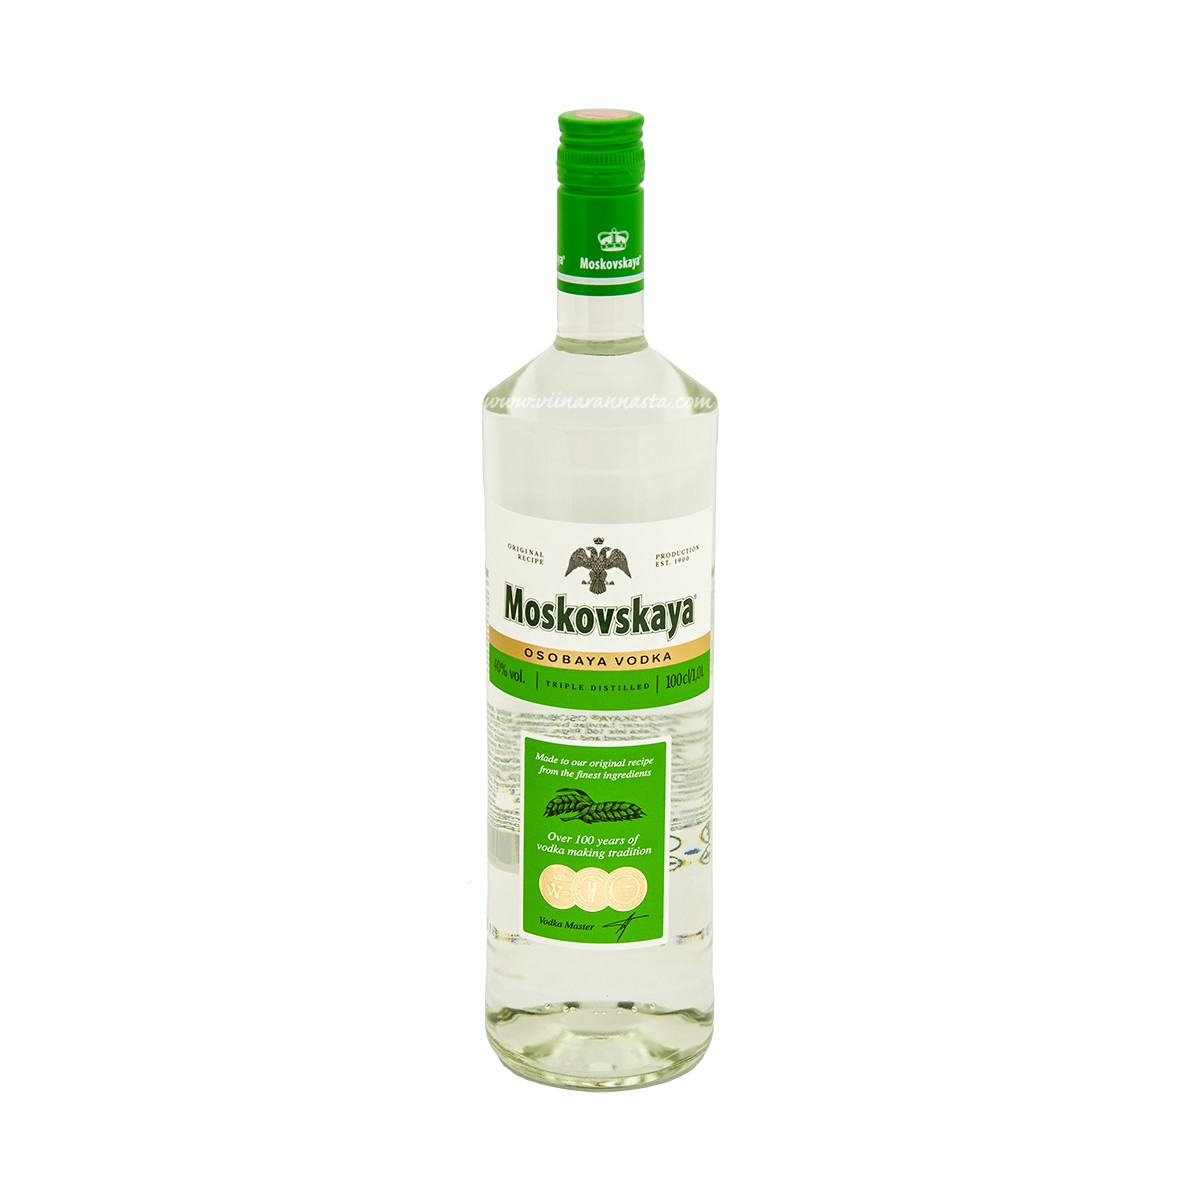 40% 100cl Vodka Moskovskaya